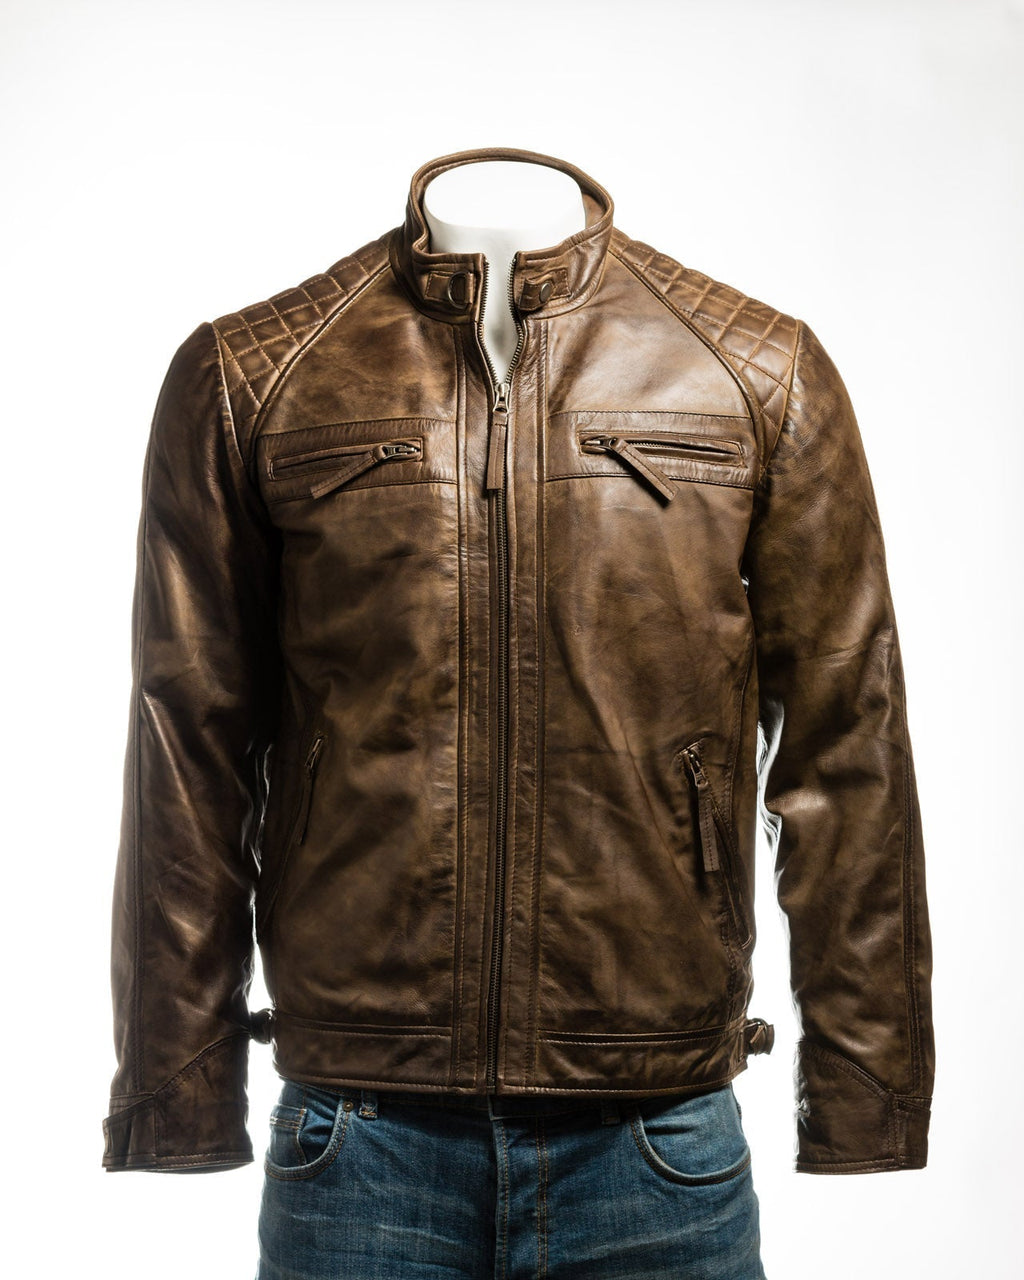 Men's Antique Brown Diamond Shoulder Biker Style Leather Jacket: Geronimo